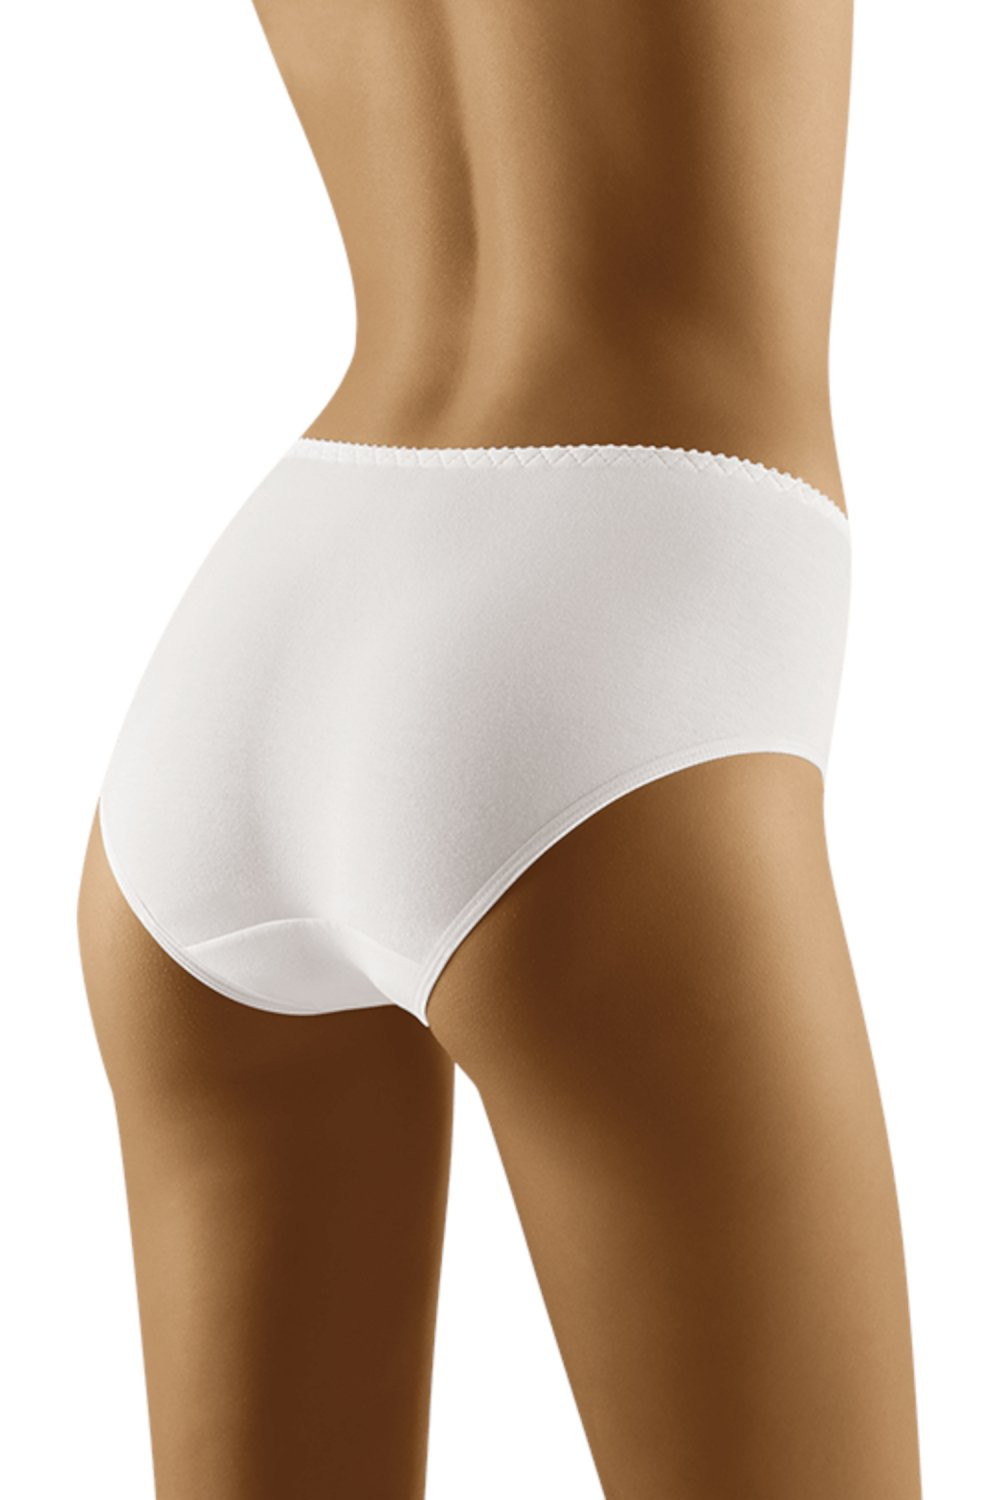 Dámské kalhotky model 17734250 white WOLBAR Bílá M - Wol-Bar